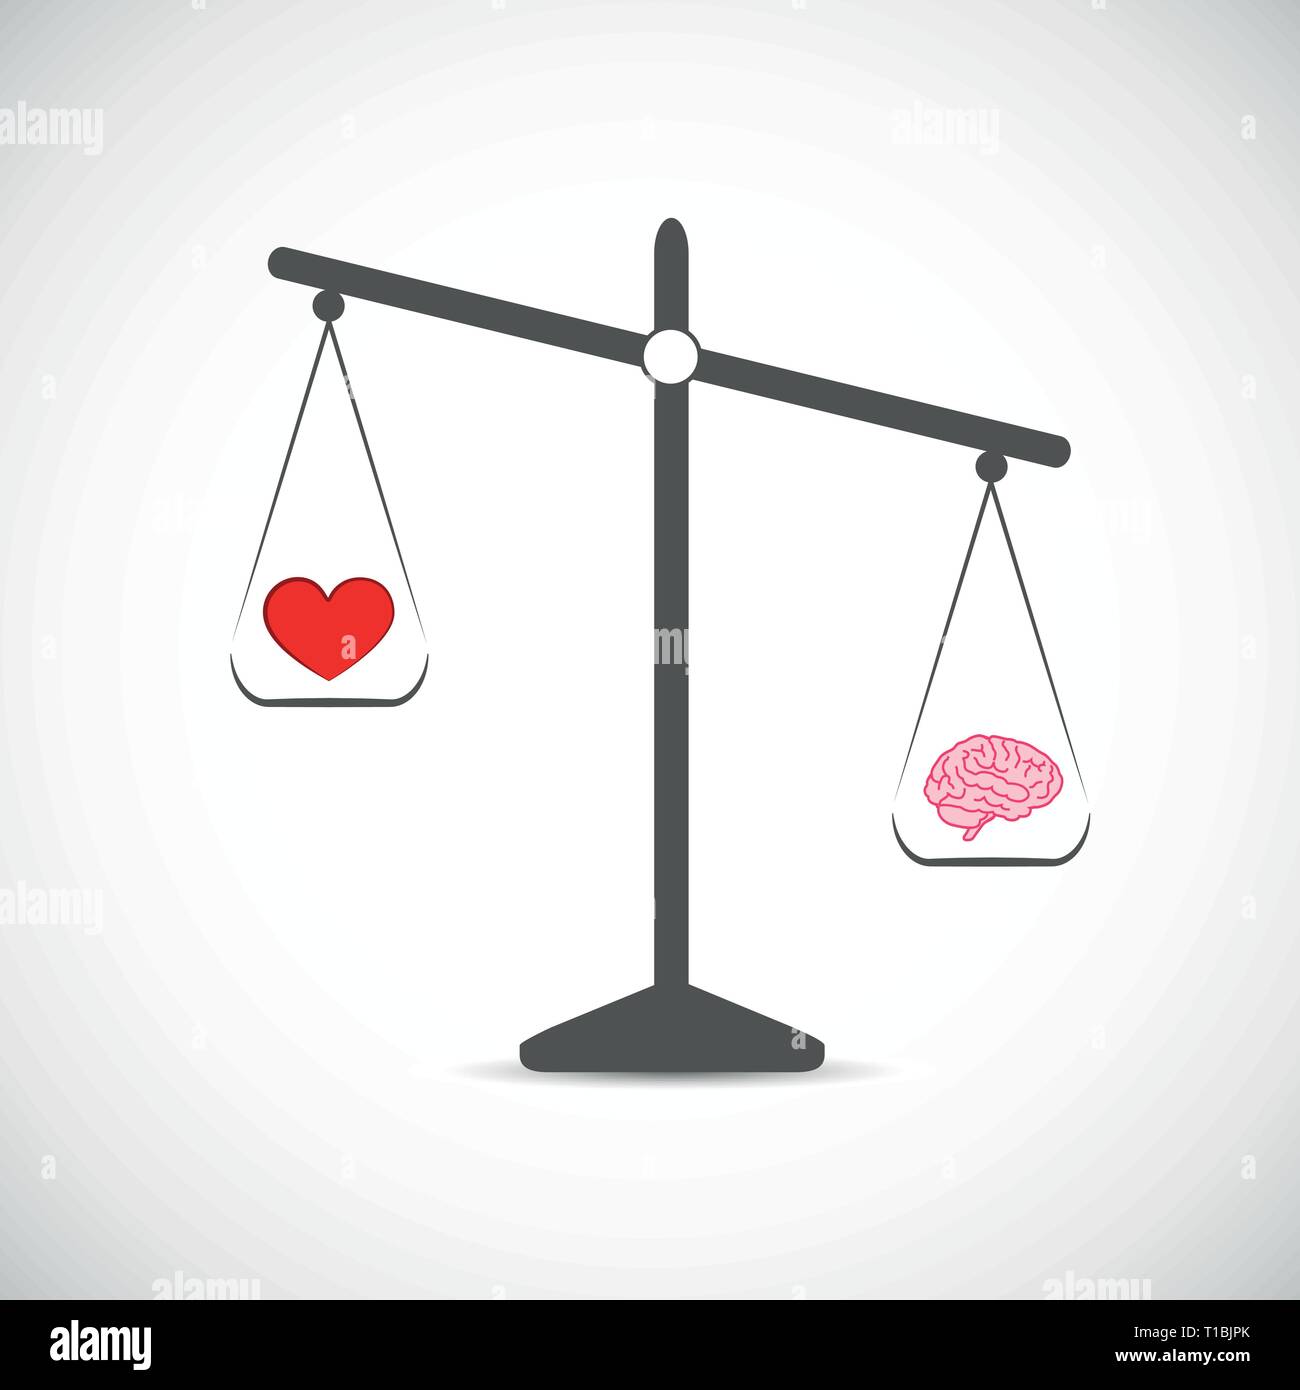 hearth and brain in balance vector illustration Stock Vector